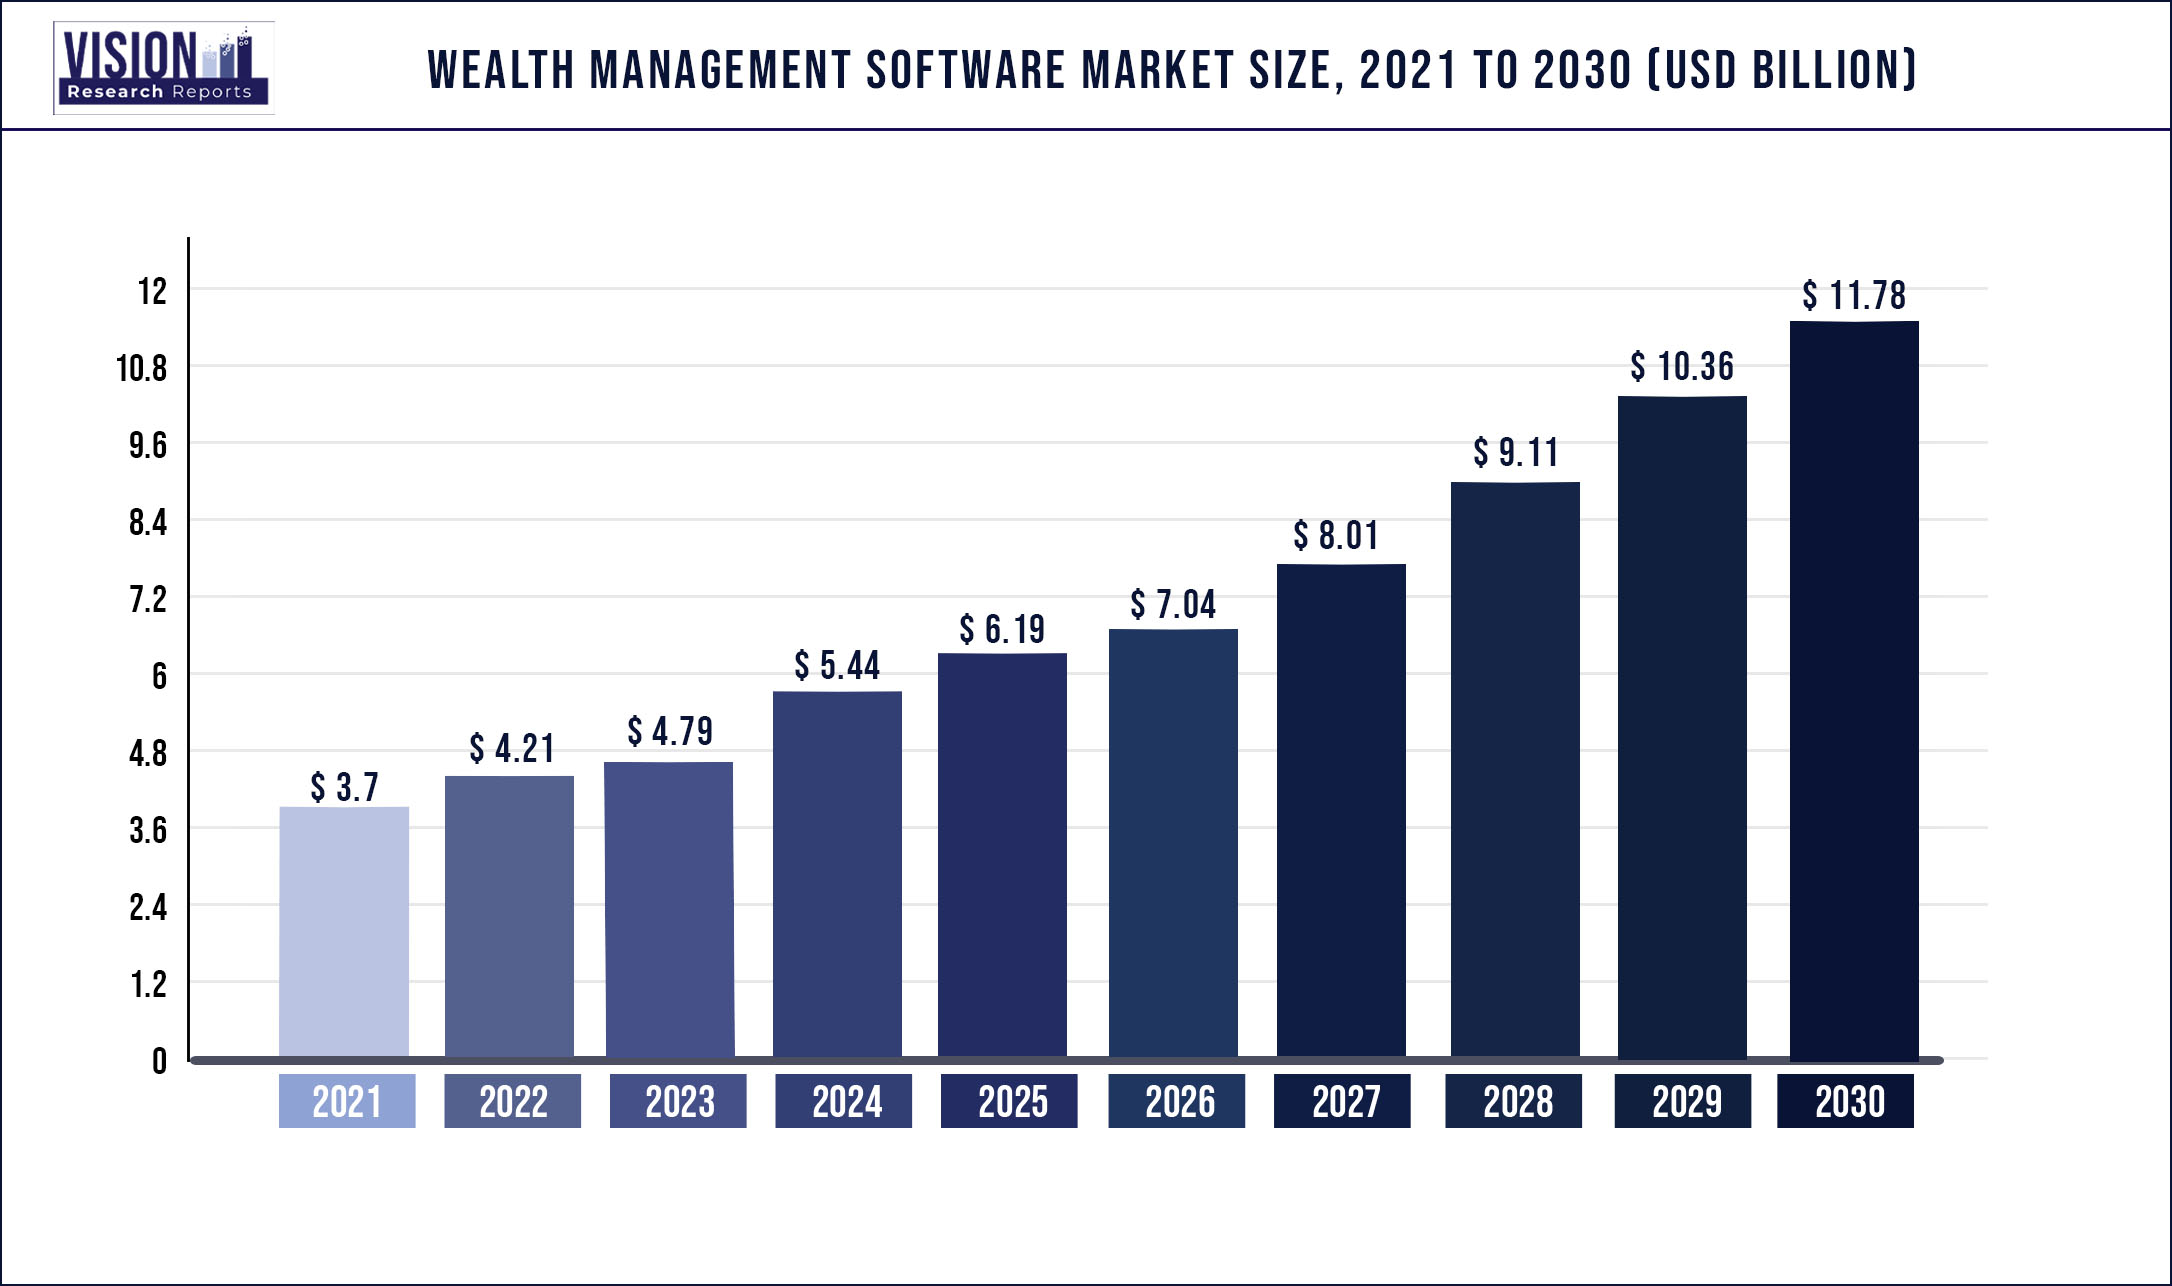 Wealth Management Software Market Size 2021 to 2030